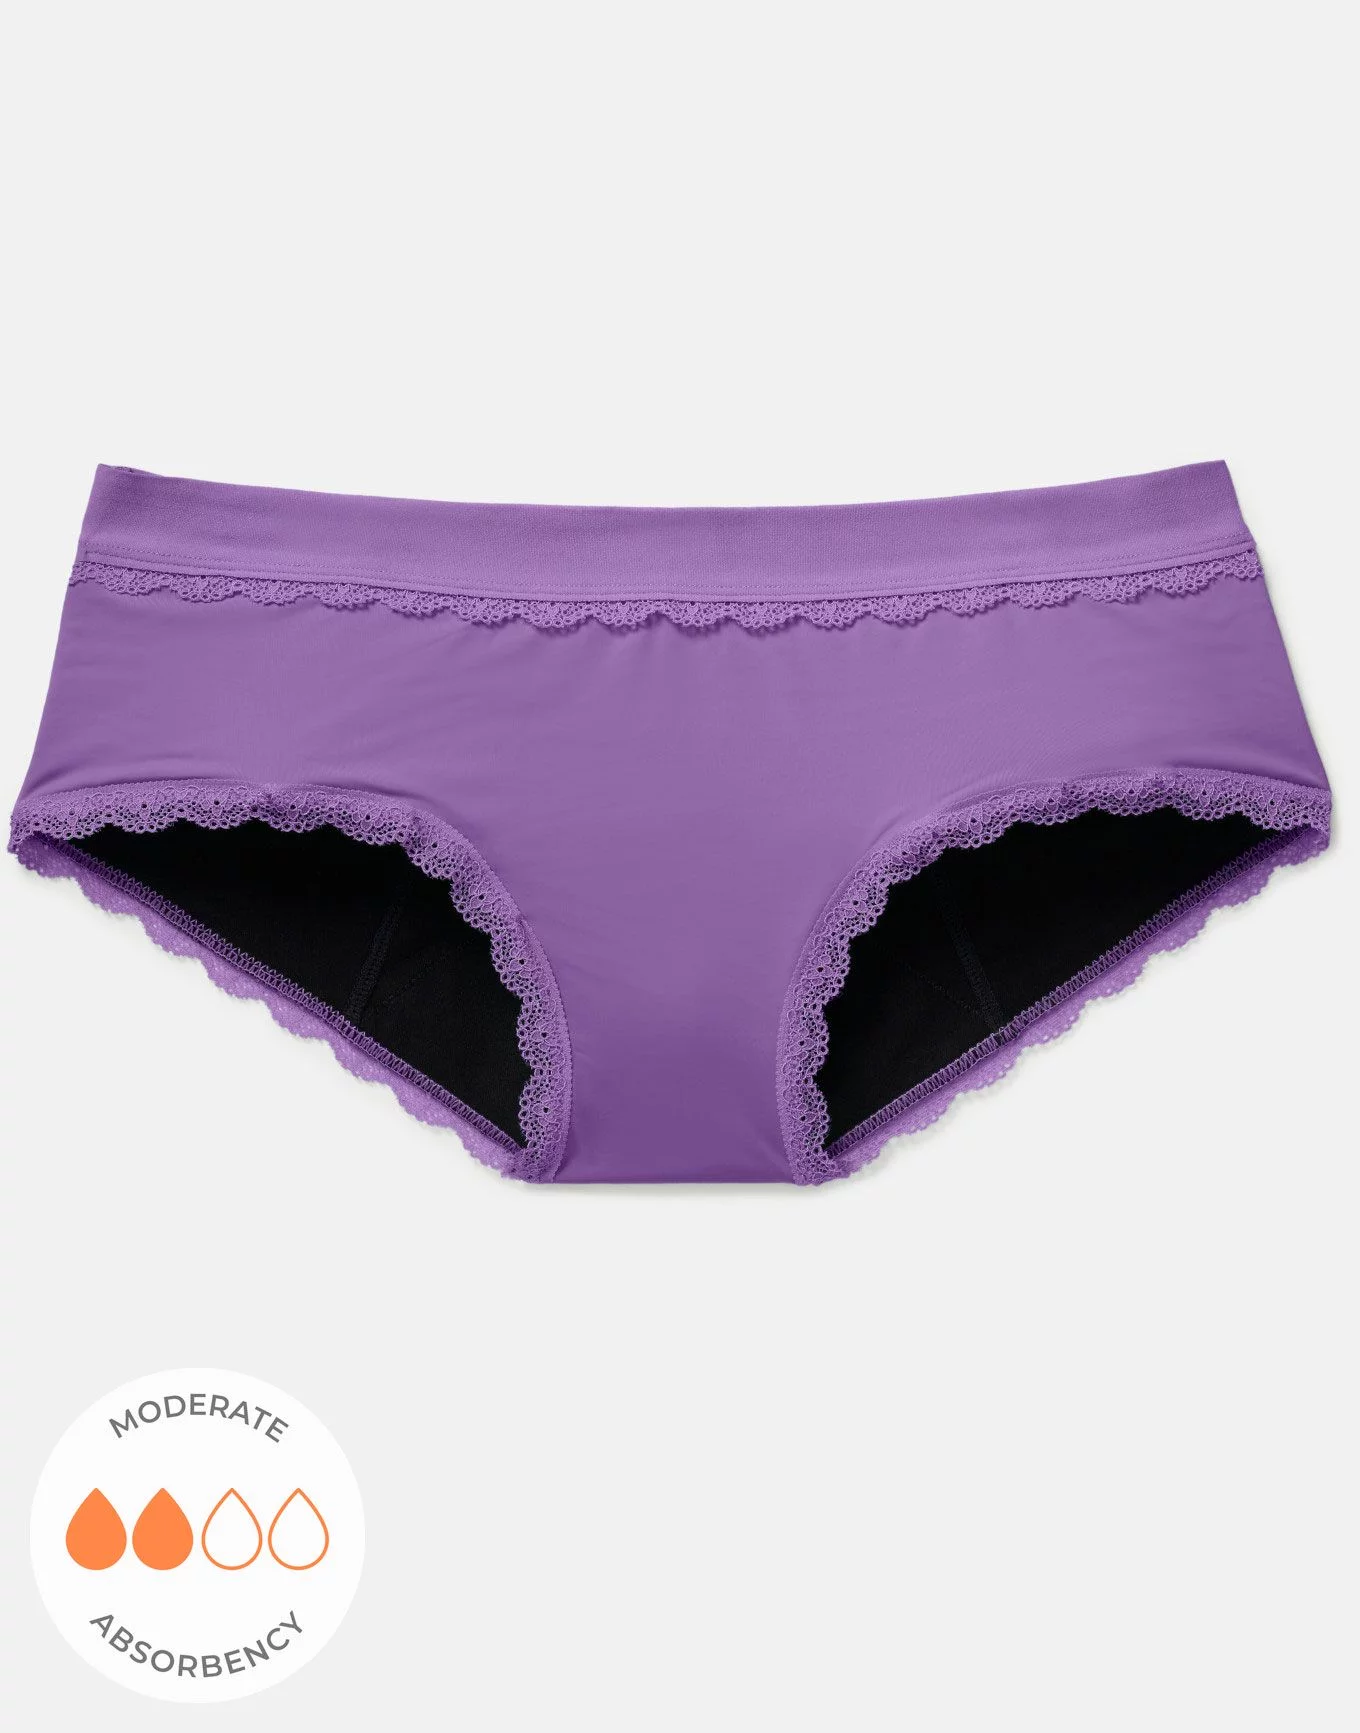 aaron nuestro share purple panty pics photos